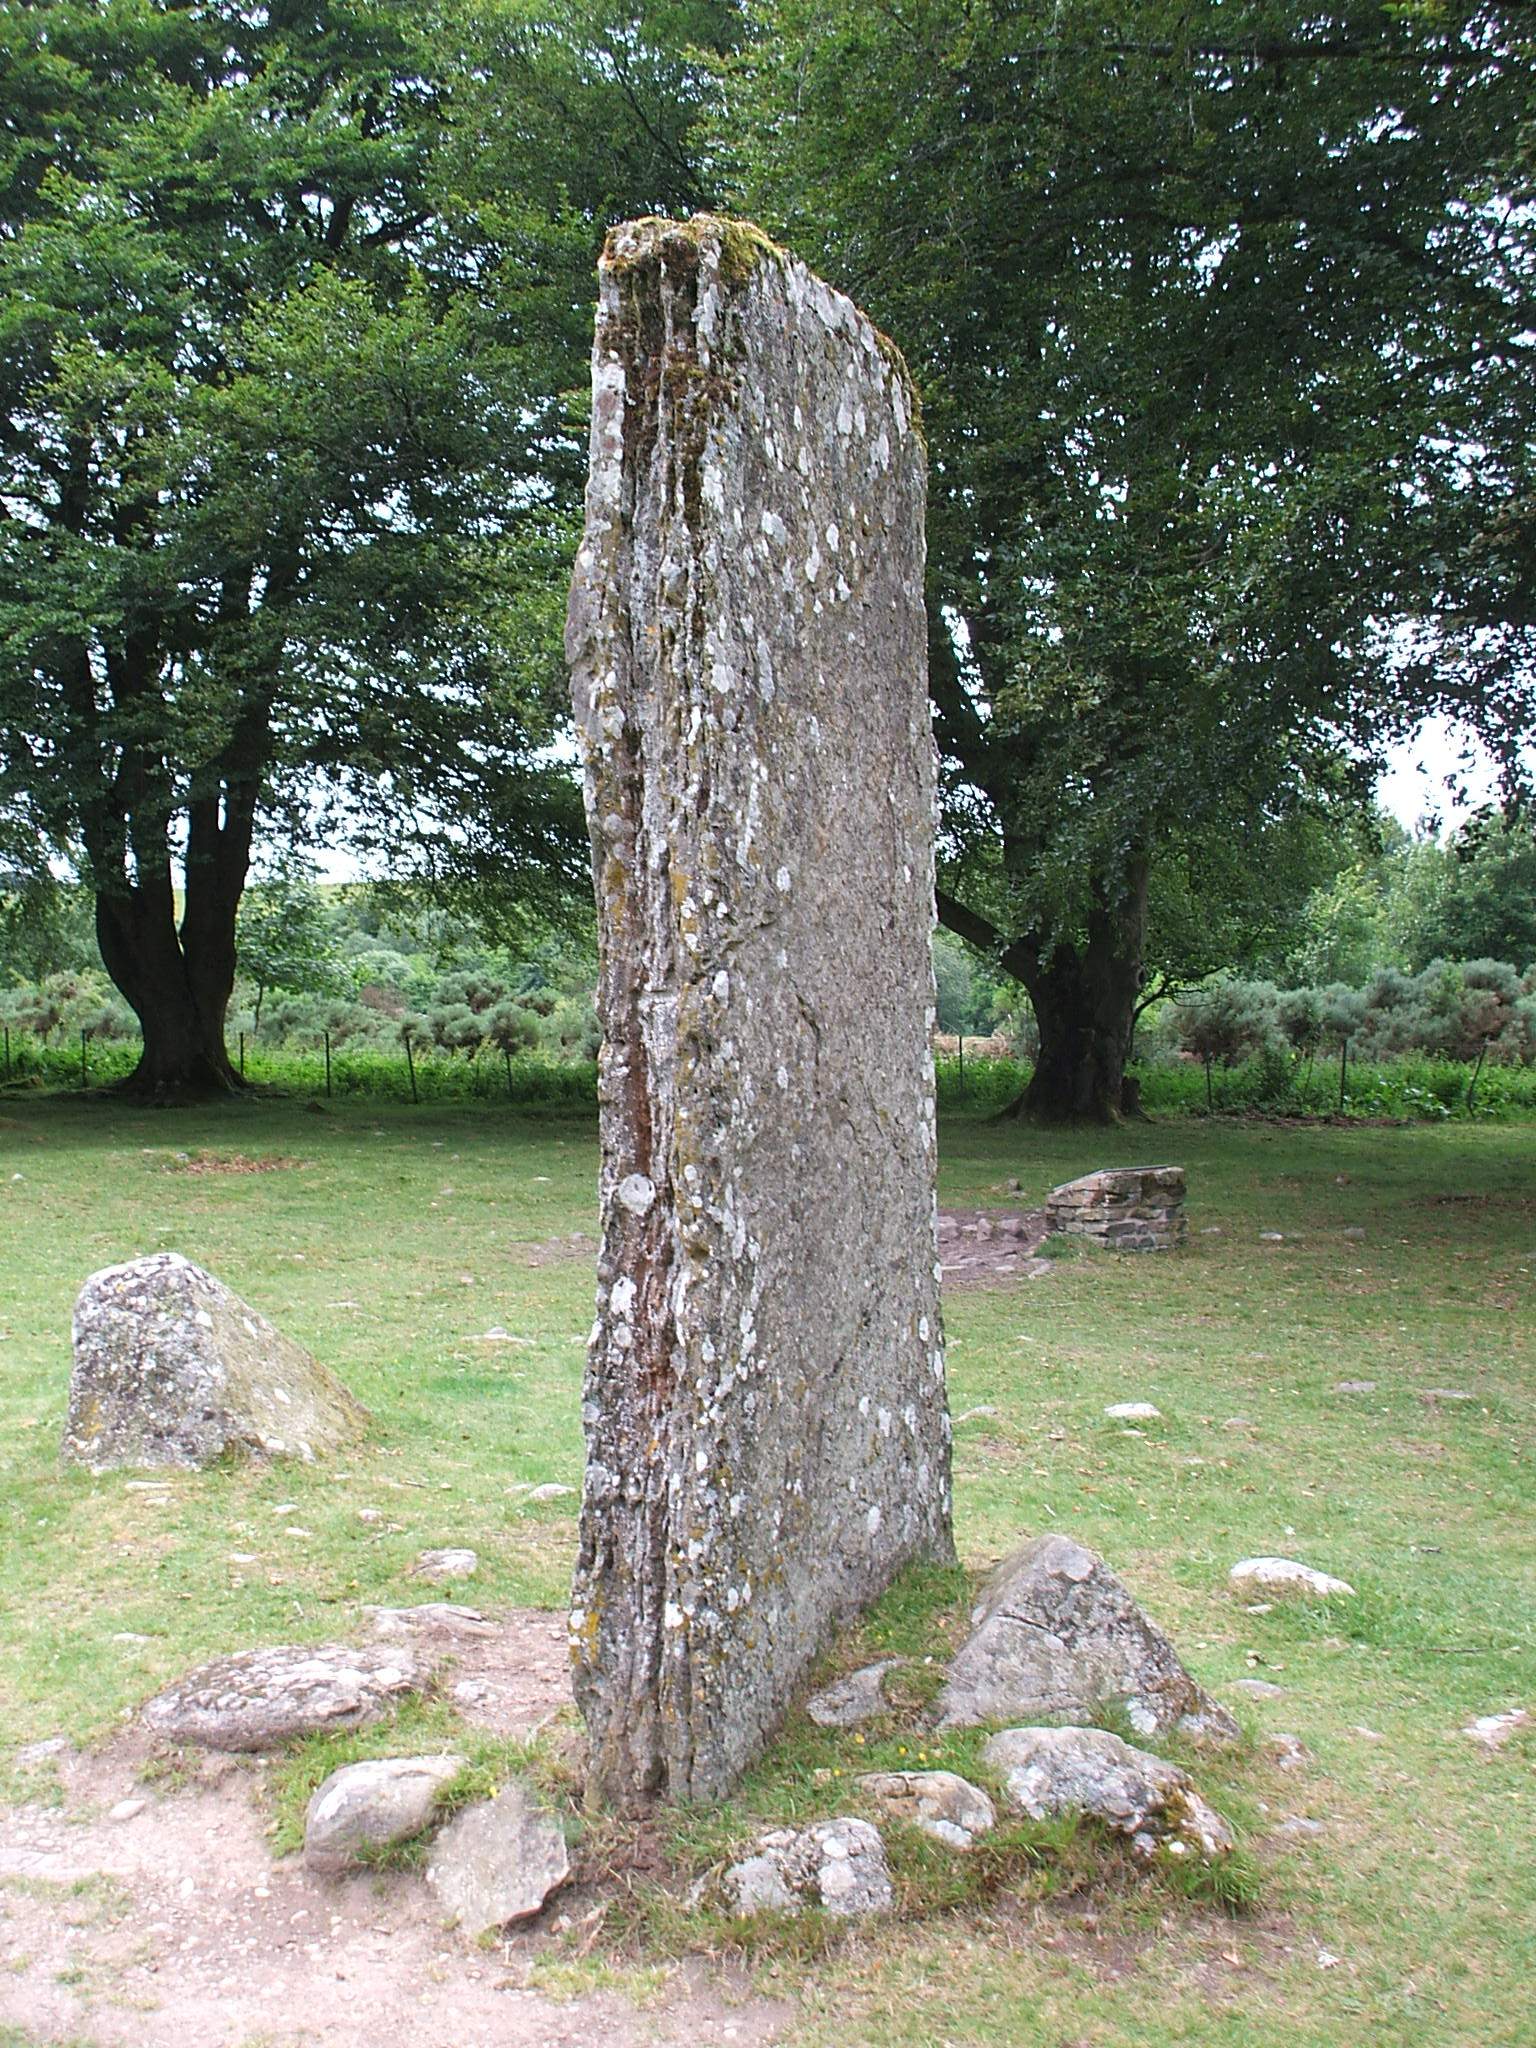 a stone outcrop in a grass field